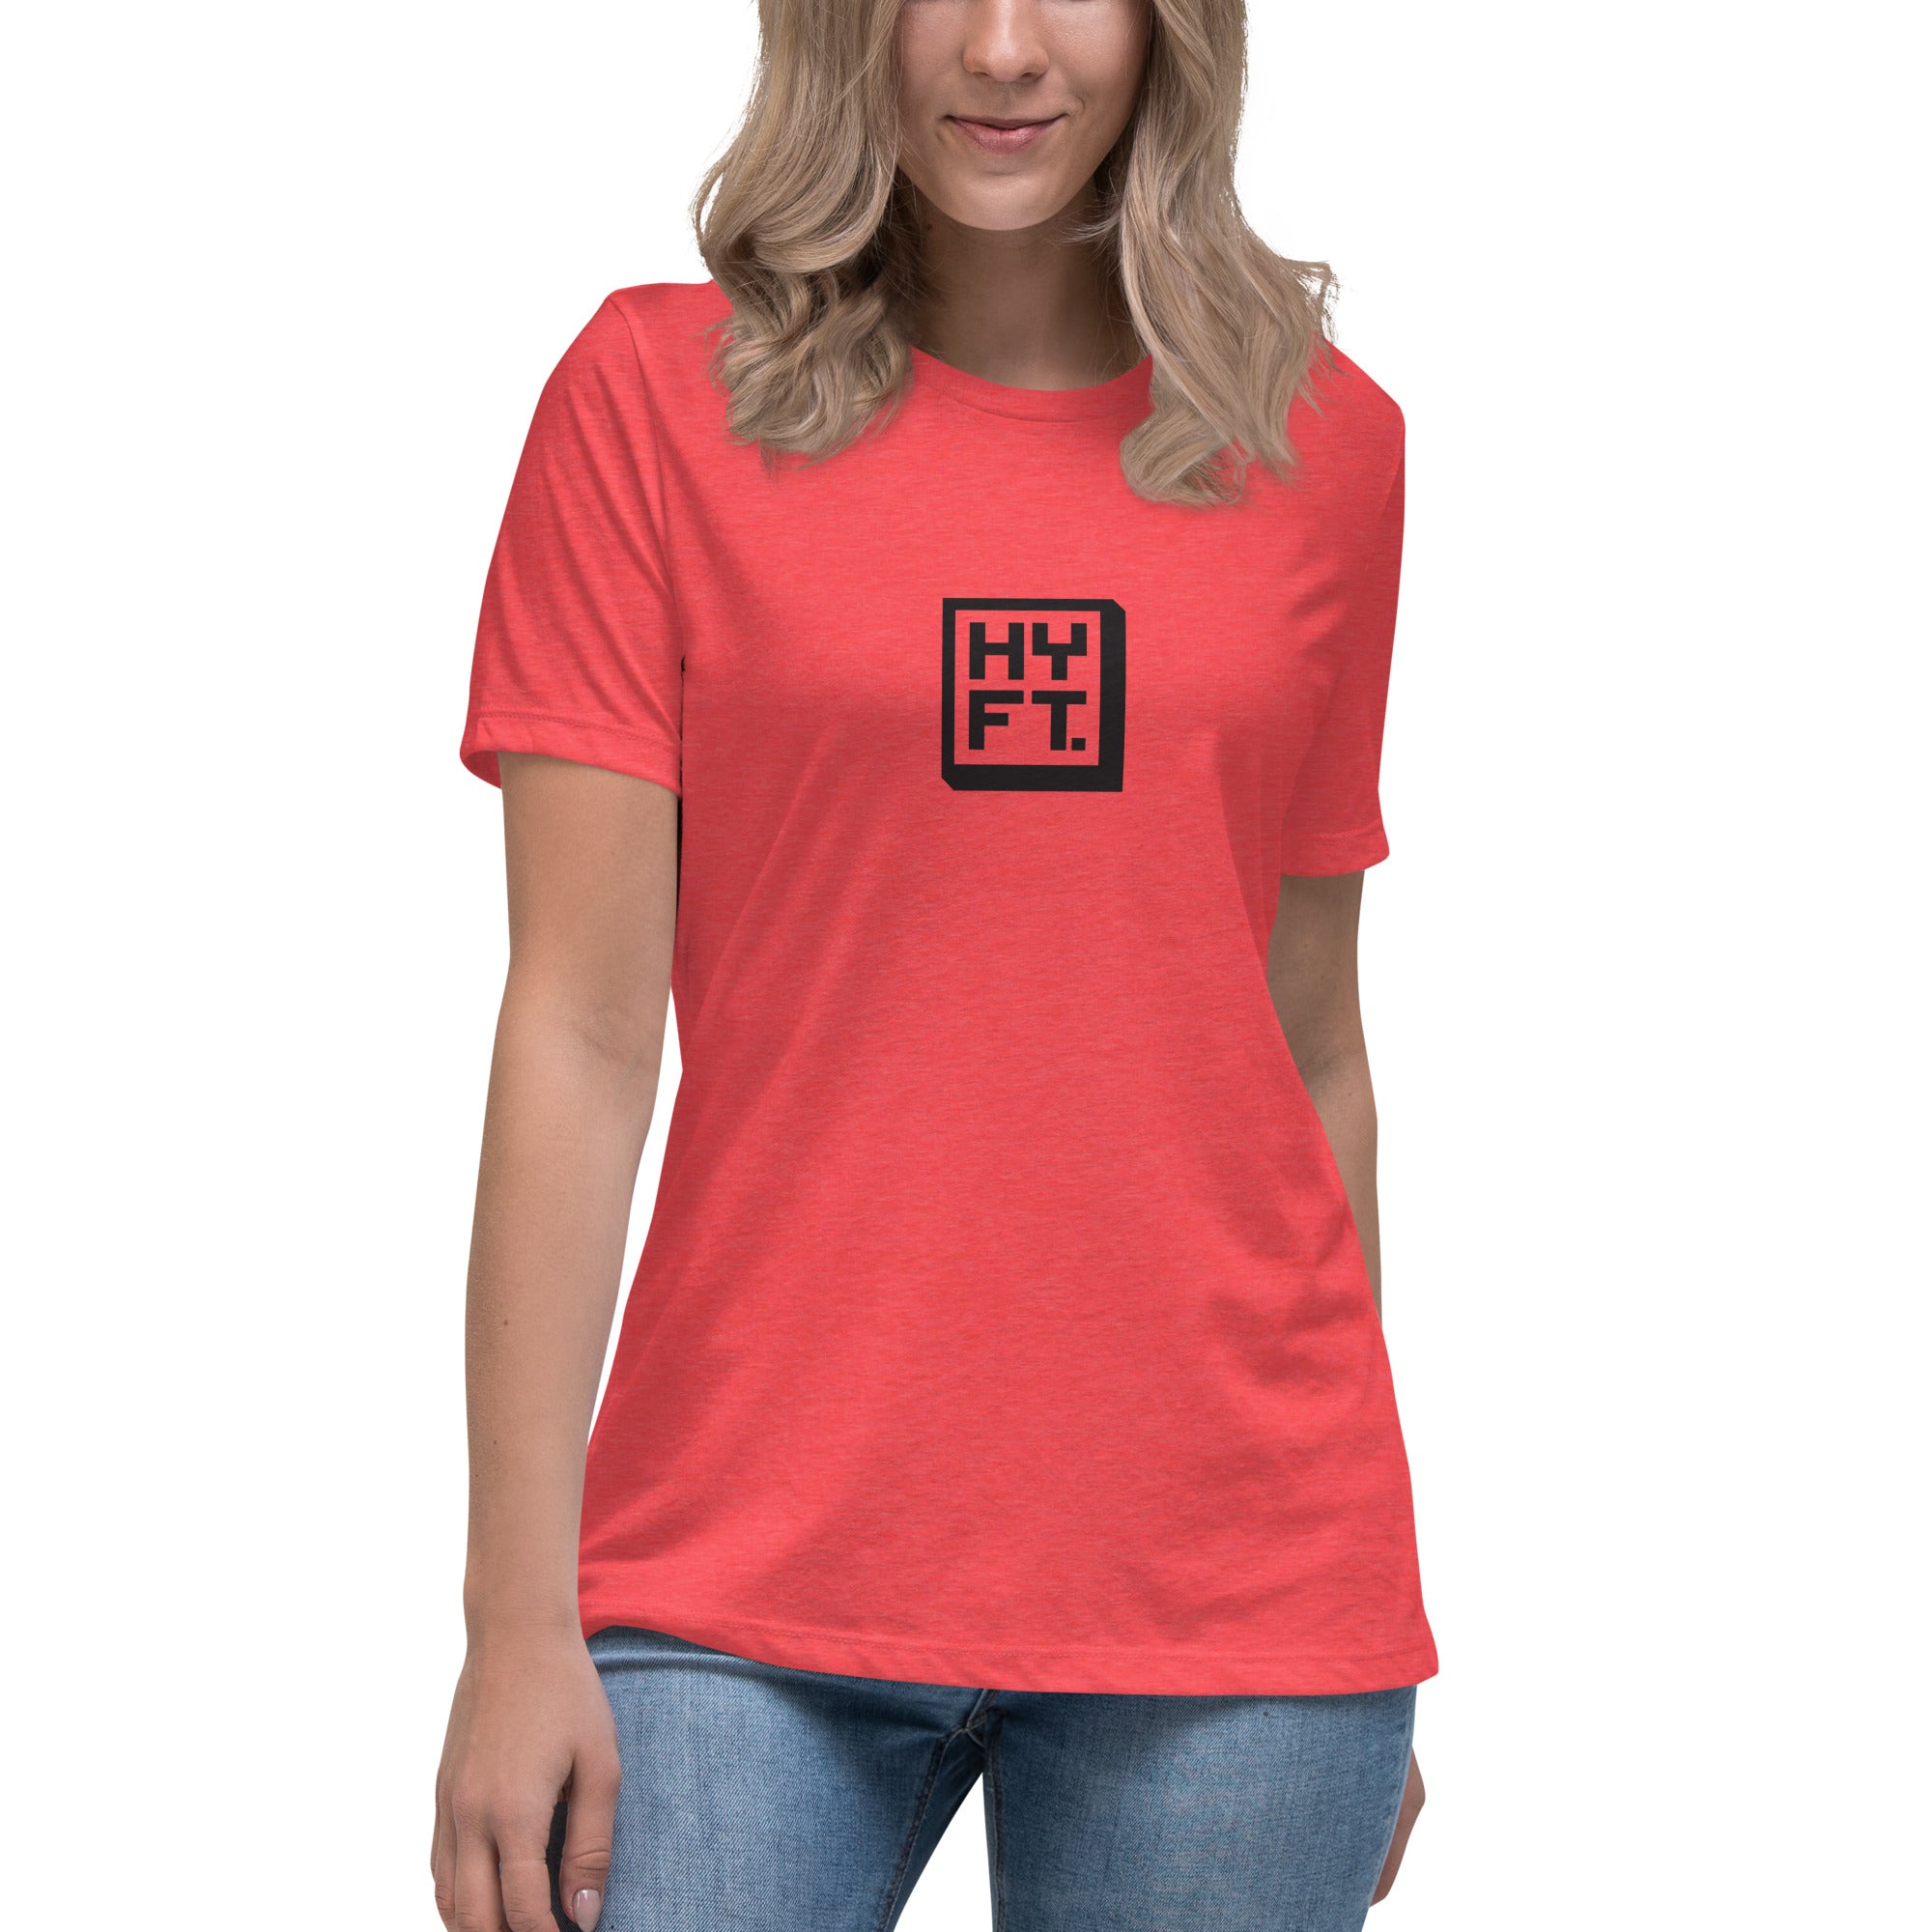 Hoye Fit Boxed Logo - Light Shirts Black Print